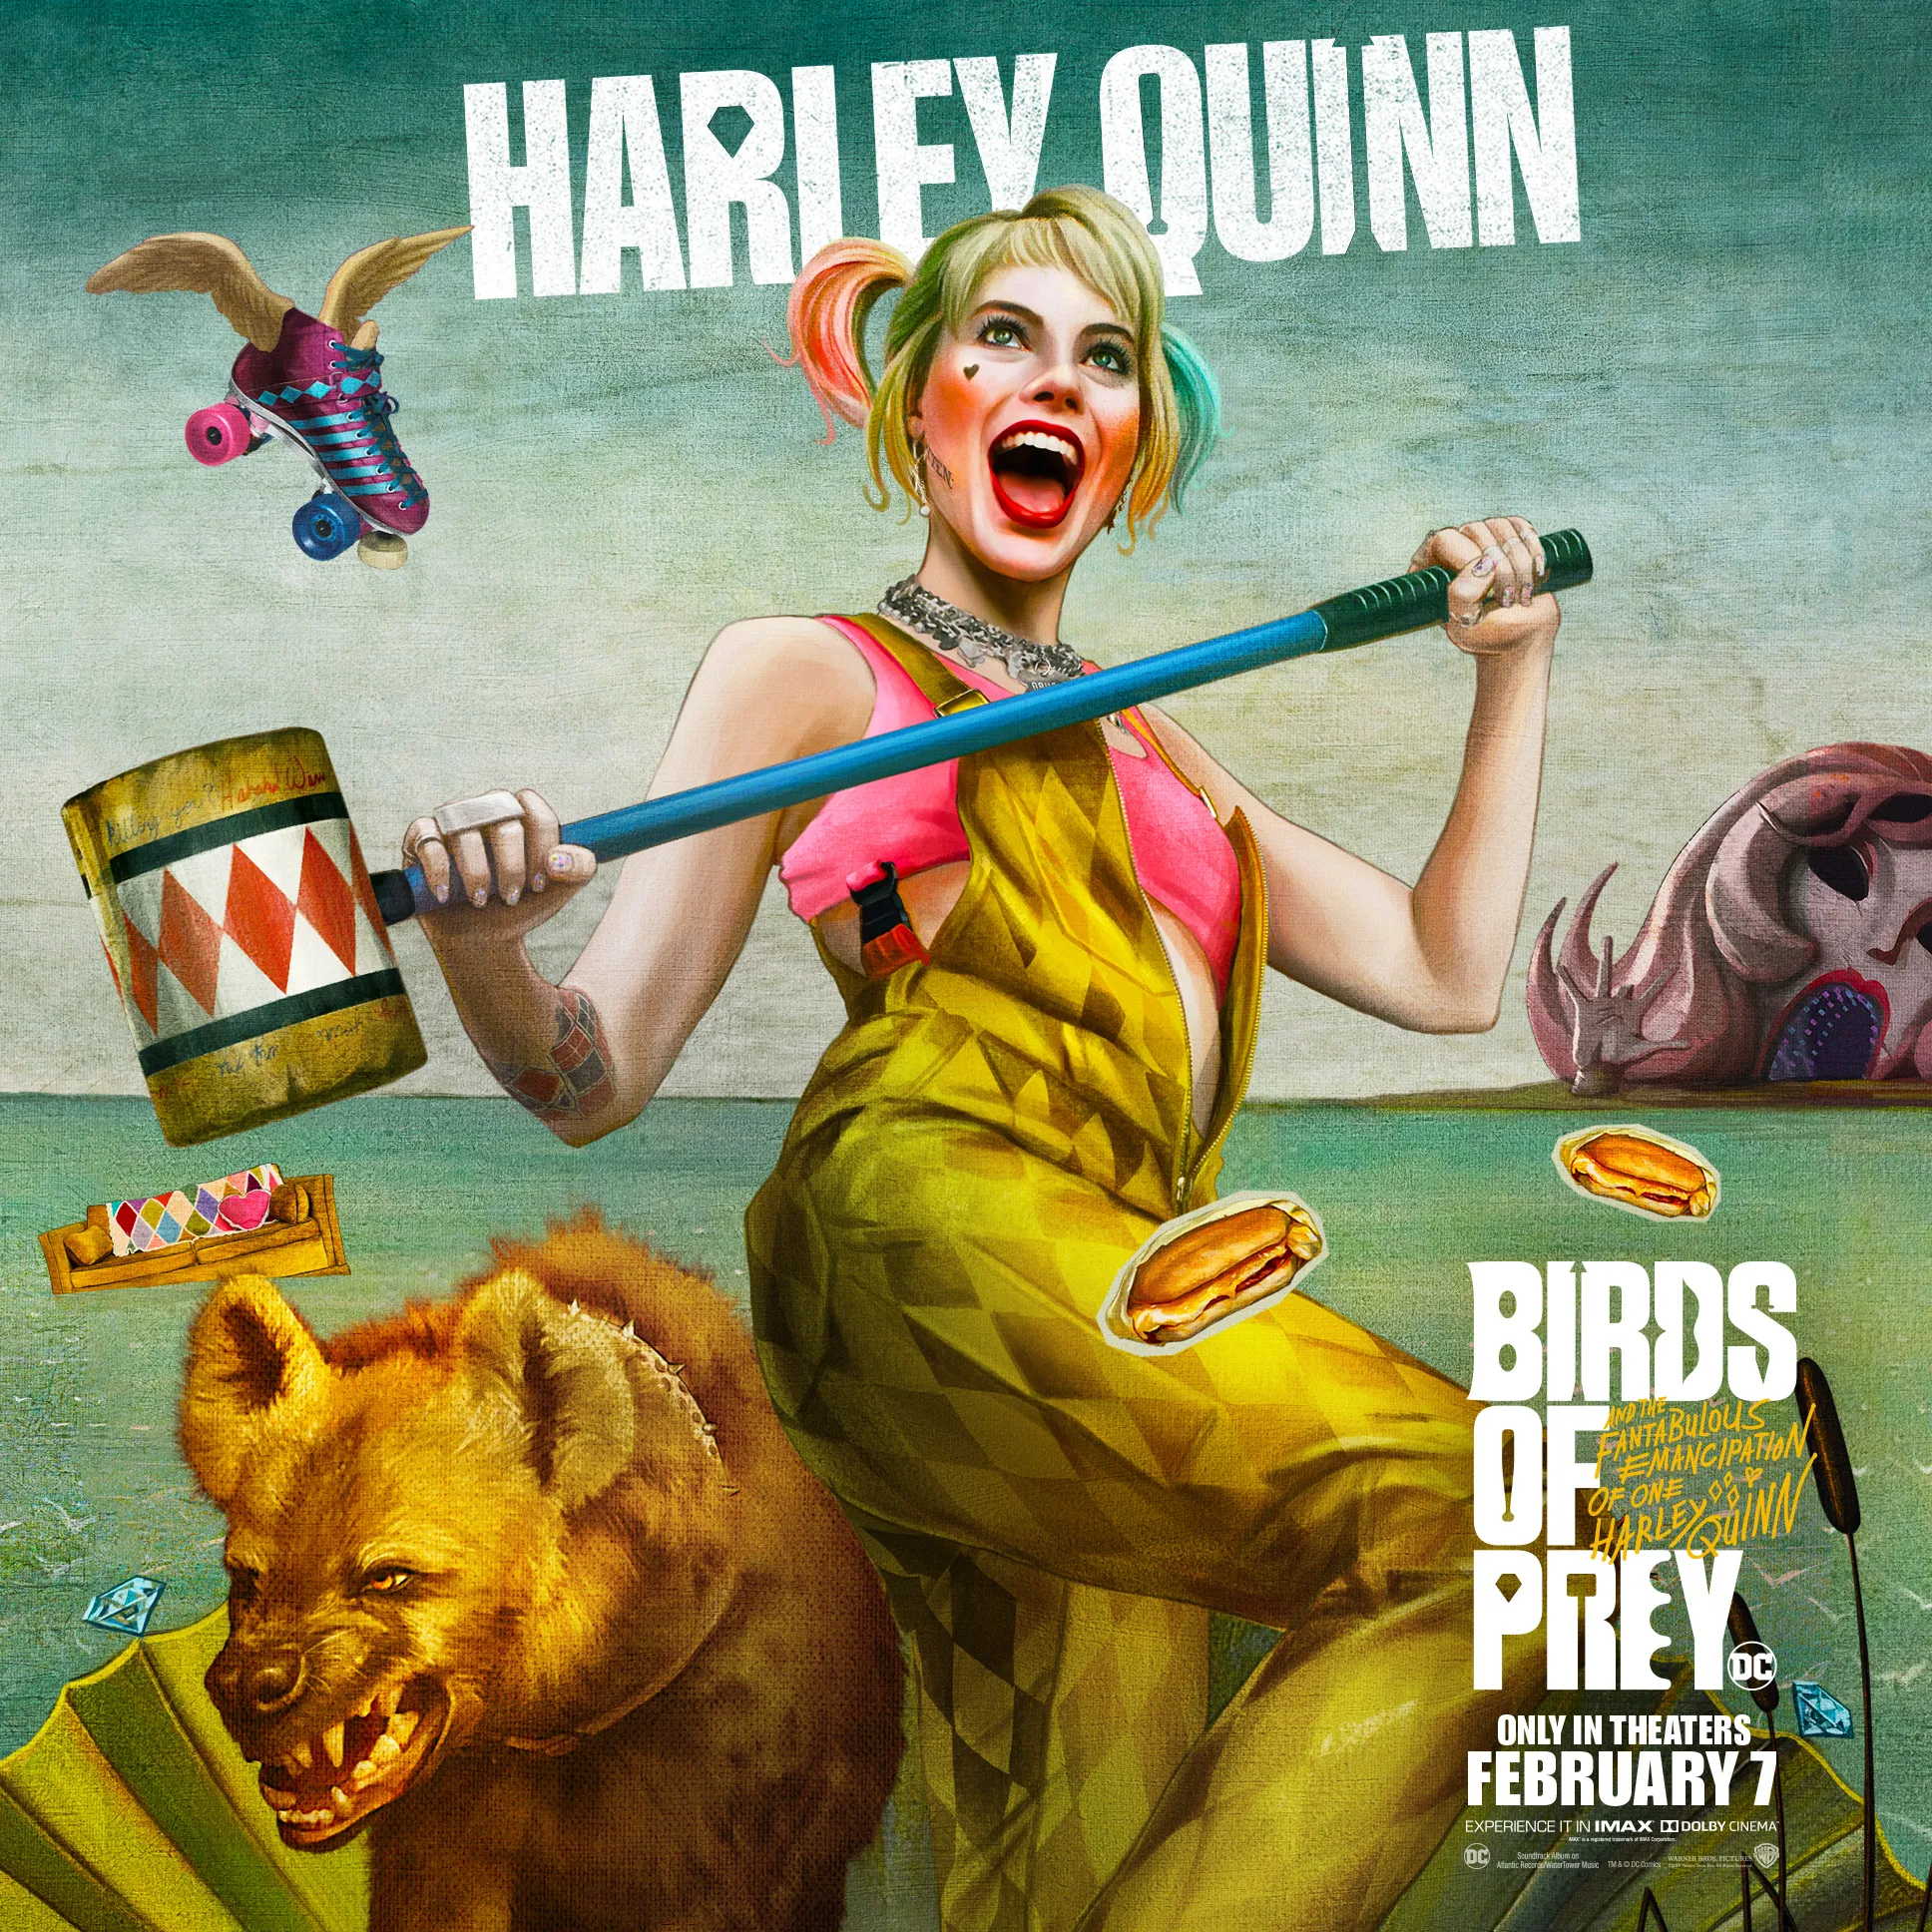 Birds Of Prey' Soundtrack Track List – Billboard